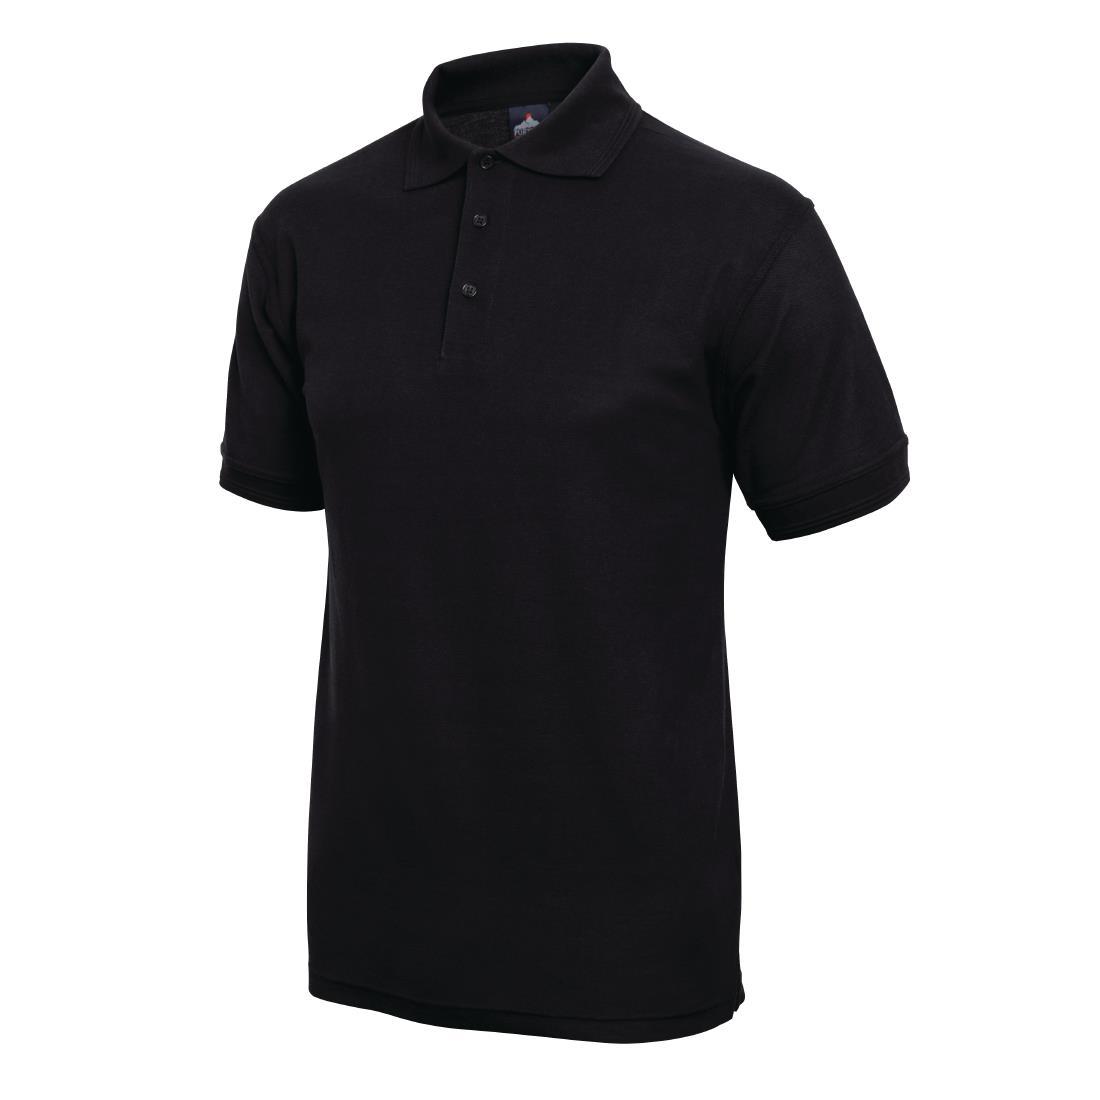 Unisex Polo Shirt Black S - A735-S  - 2